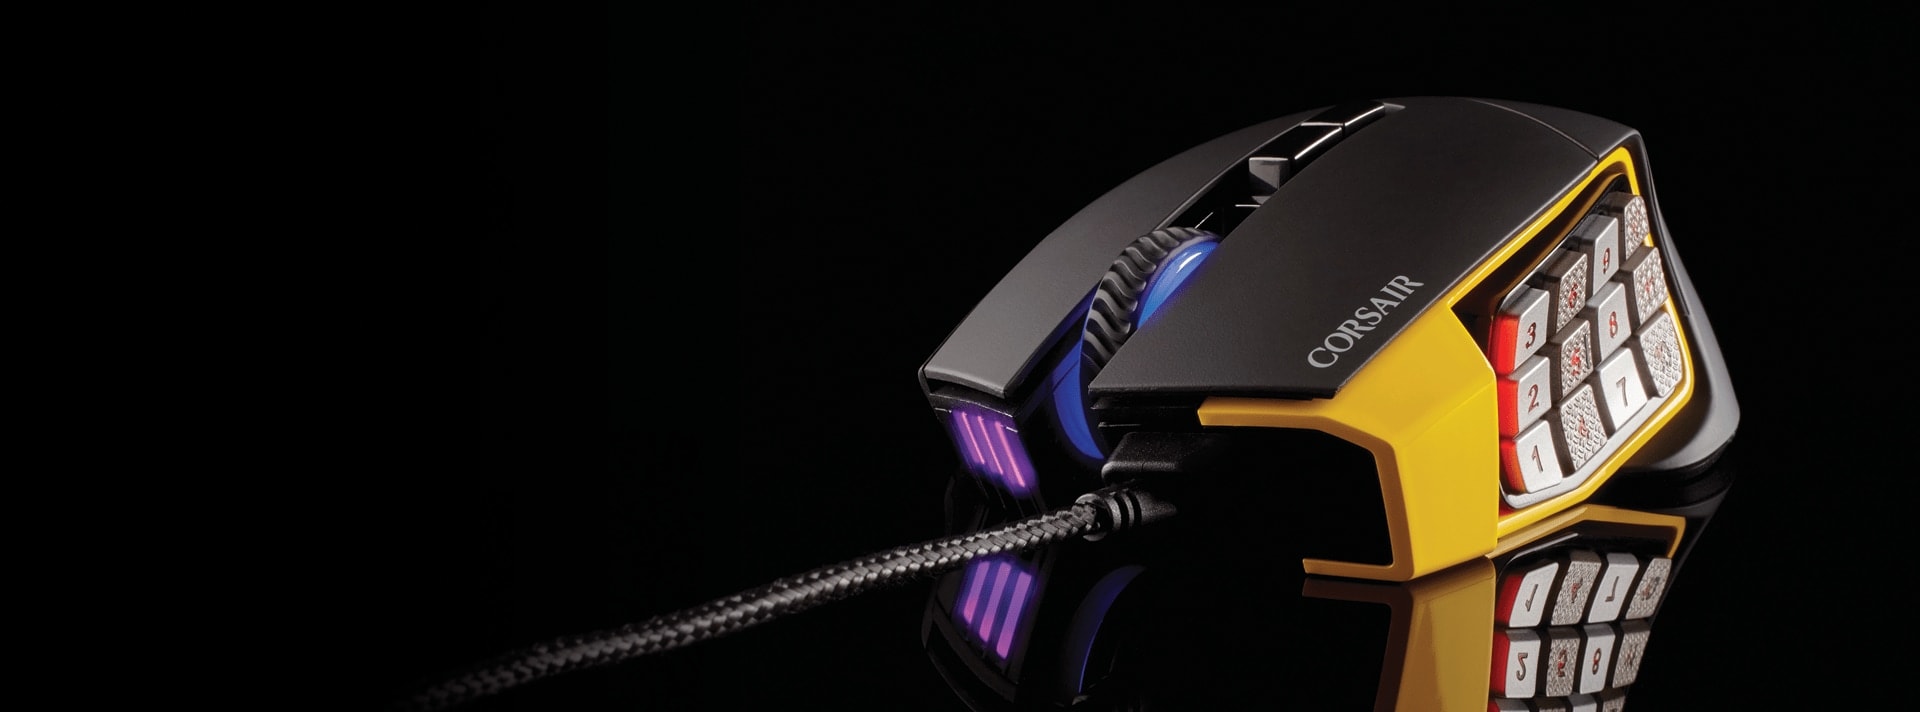 Corsair Scimitar Pro RGB - MMO Gaming Mouse - 16,000 DPI Optical Sensor -  12 Programmable Side Buttons - Black